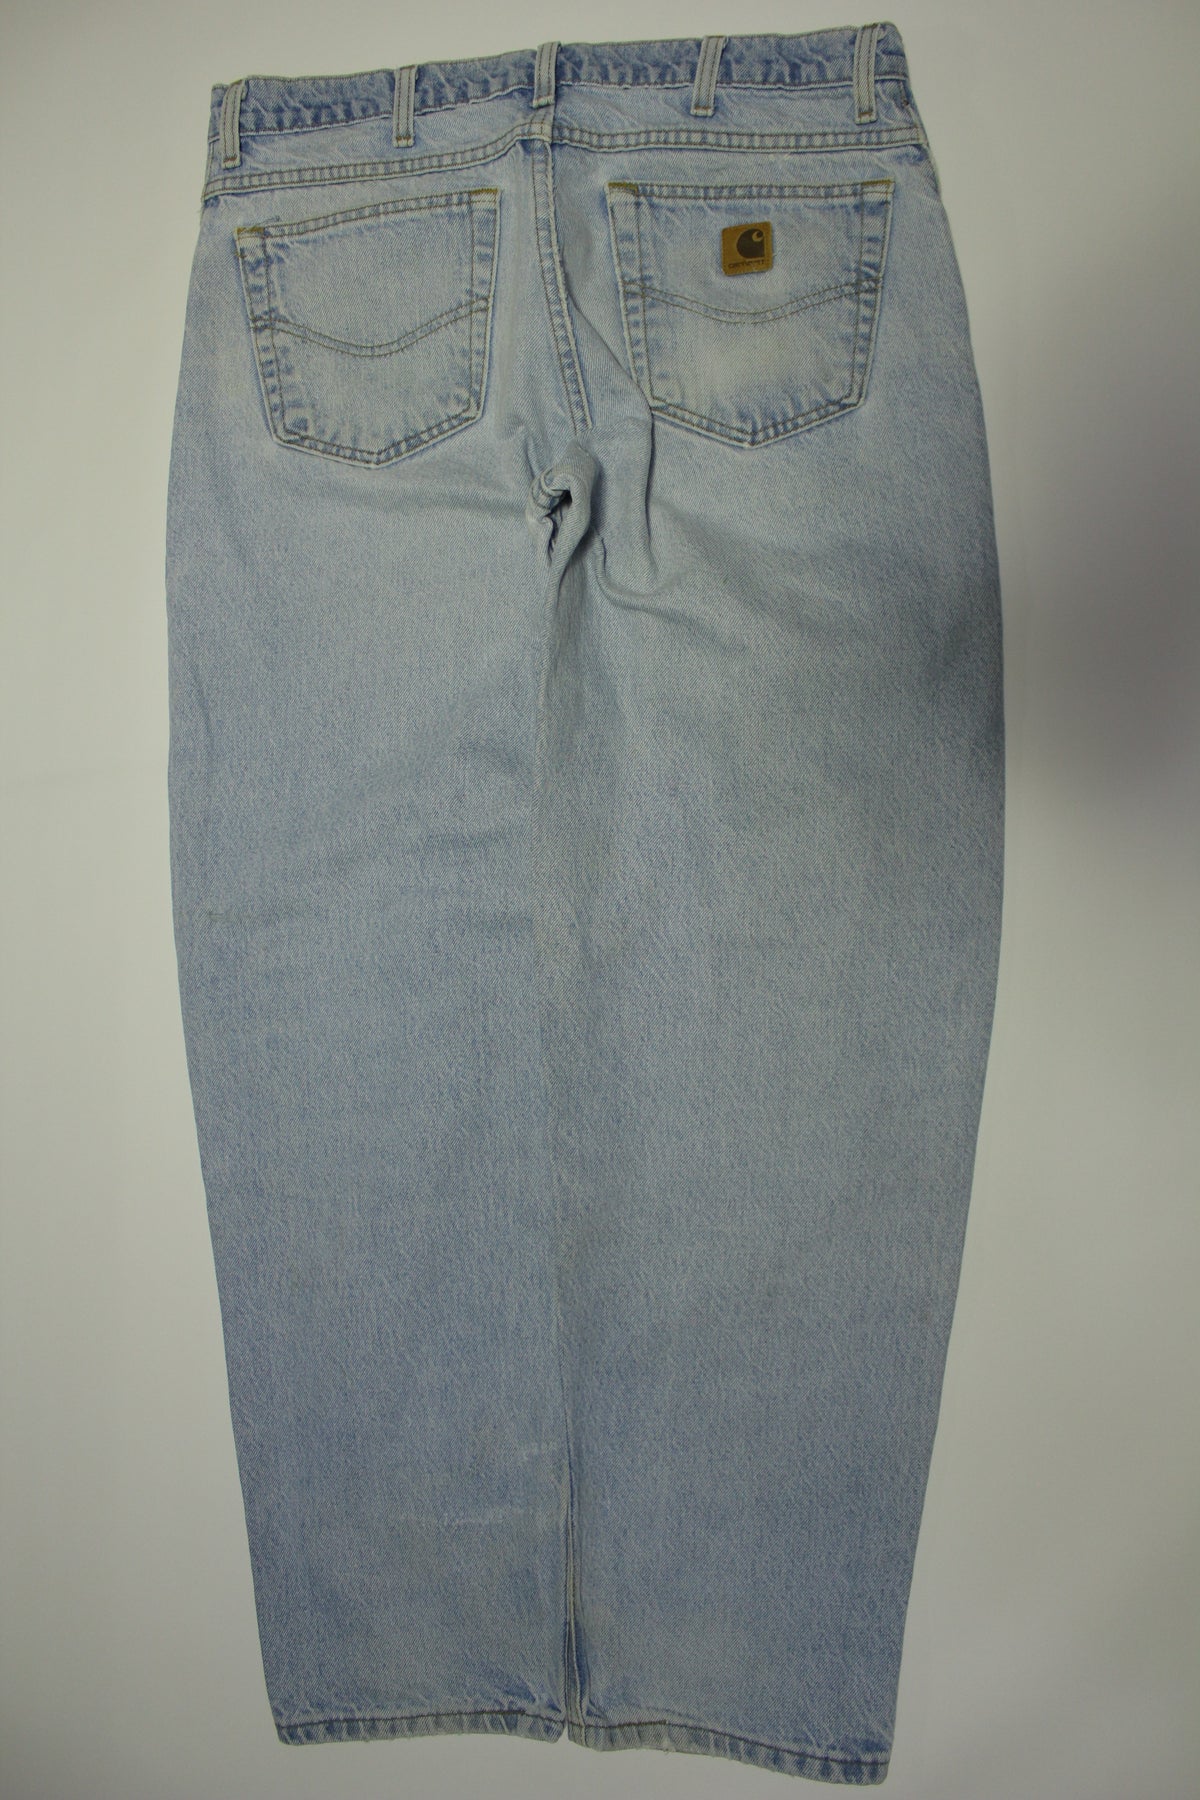 Carhartt Vintage B17 STW Union Made USA Blue Jean Light Stone Wash Denim Work Pants